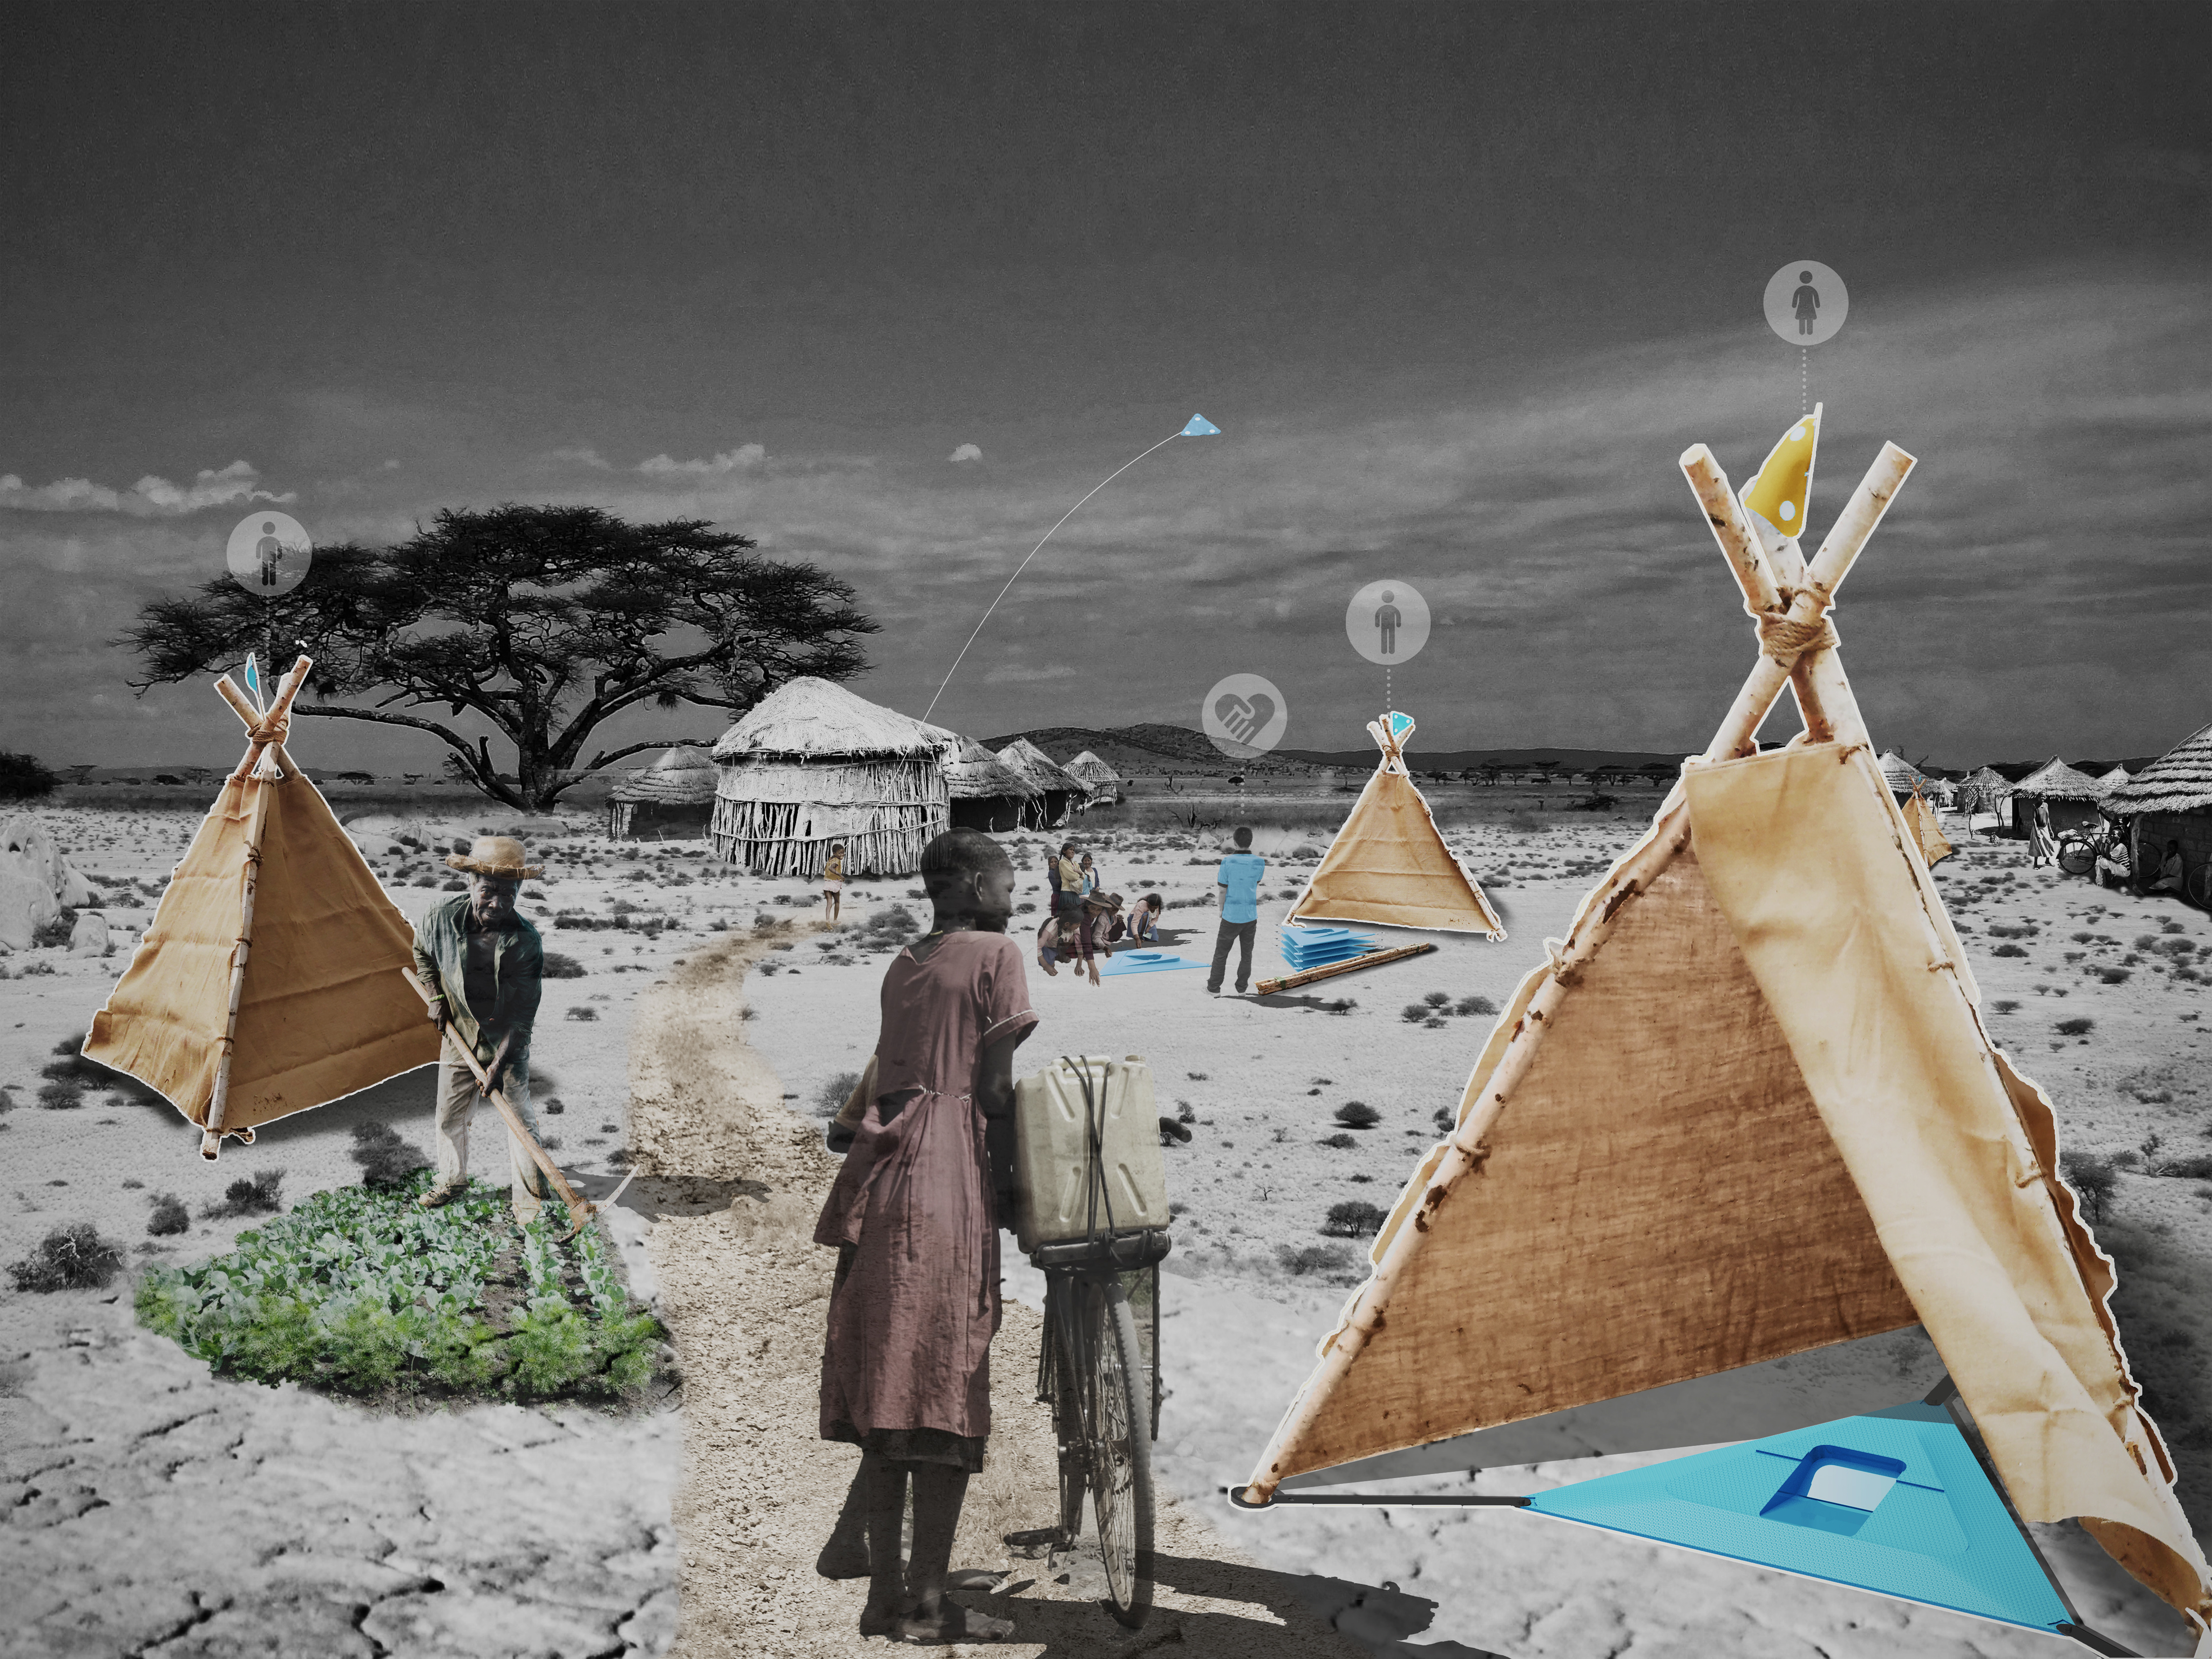 Blue Triangle: African Latrine Aid Program